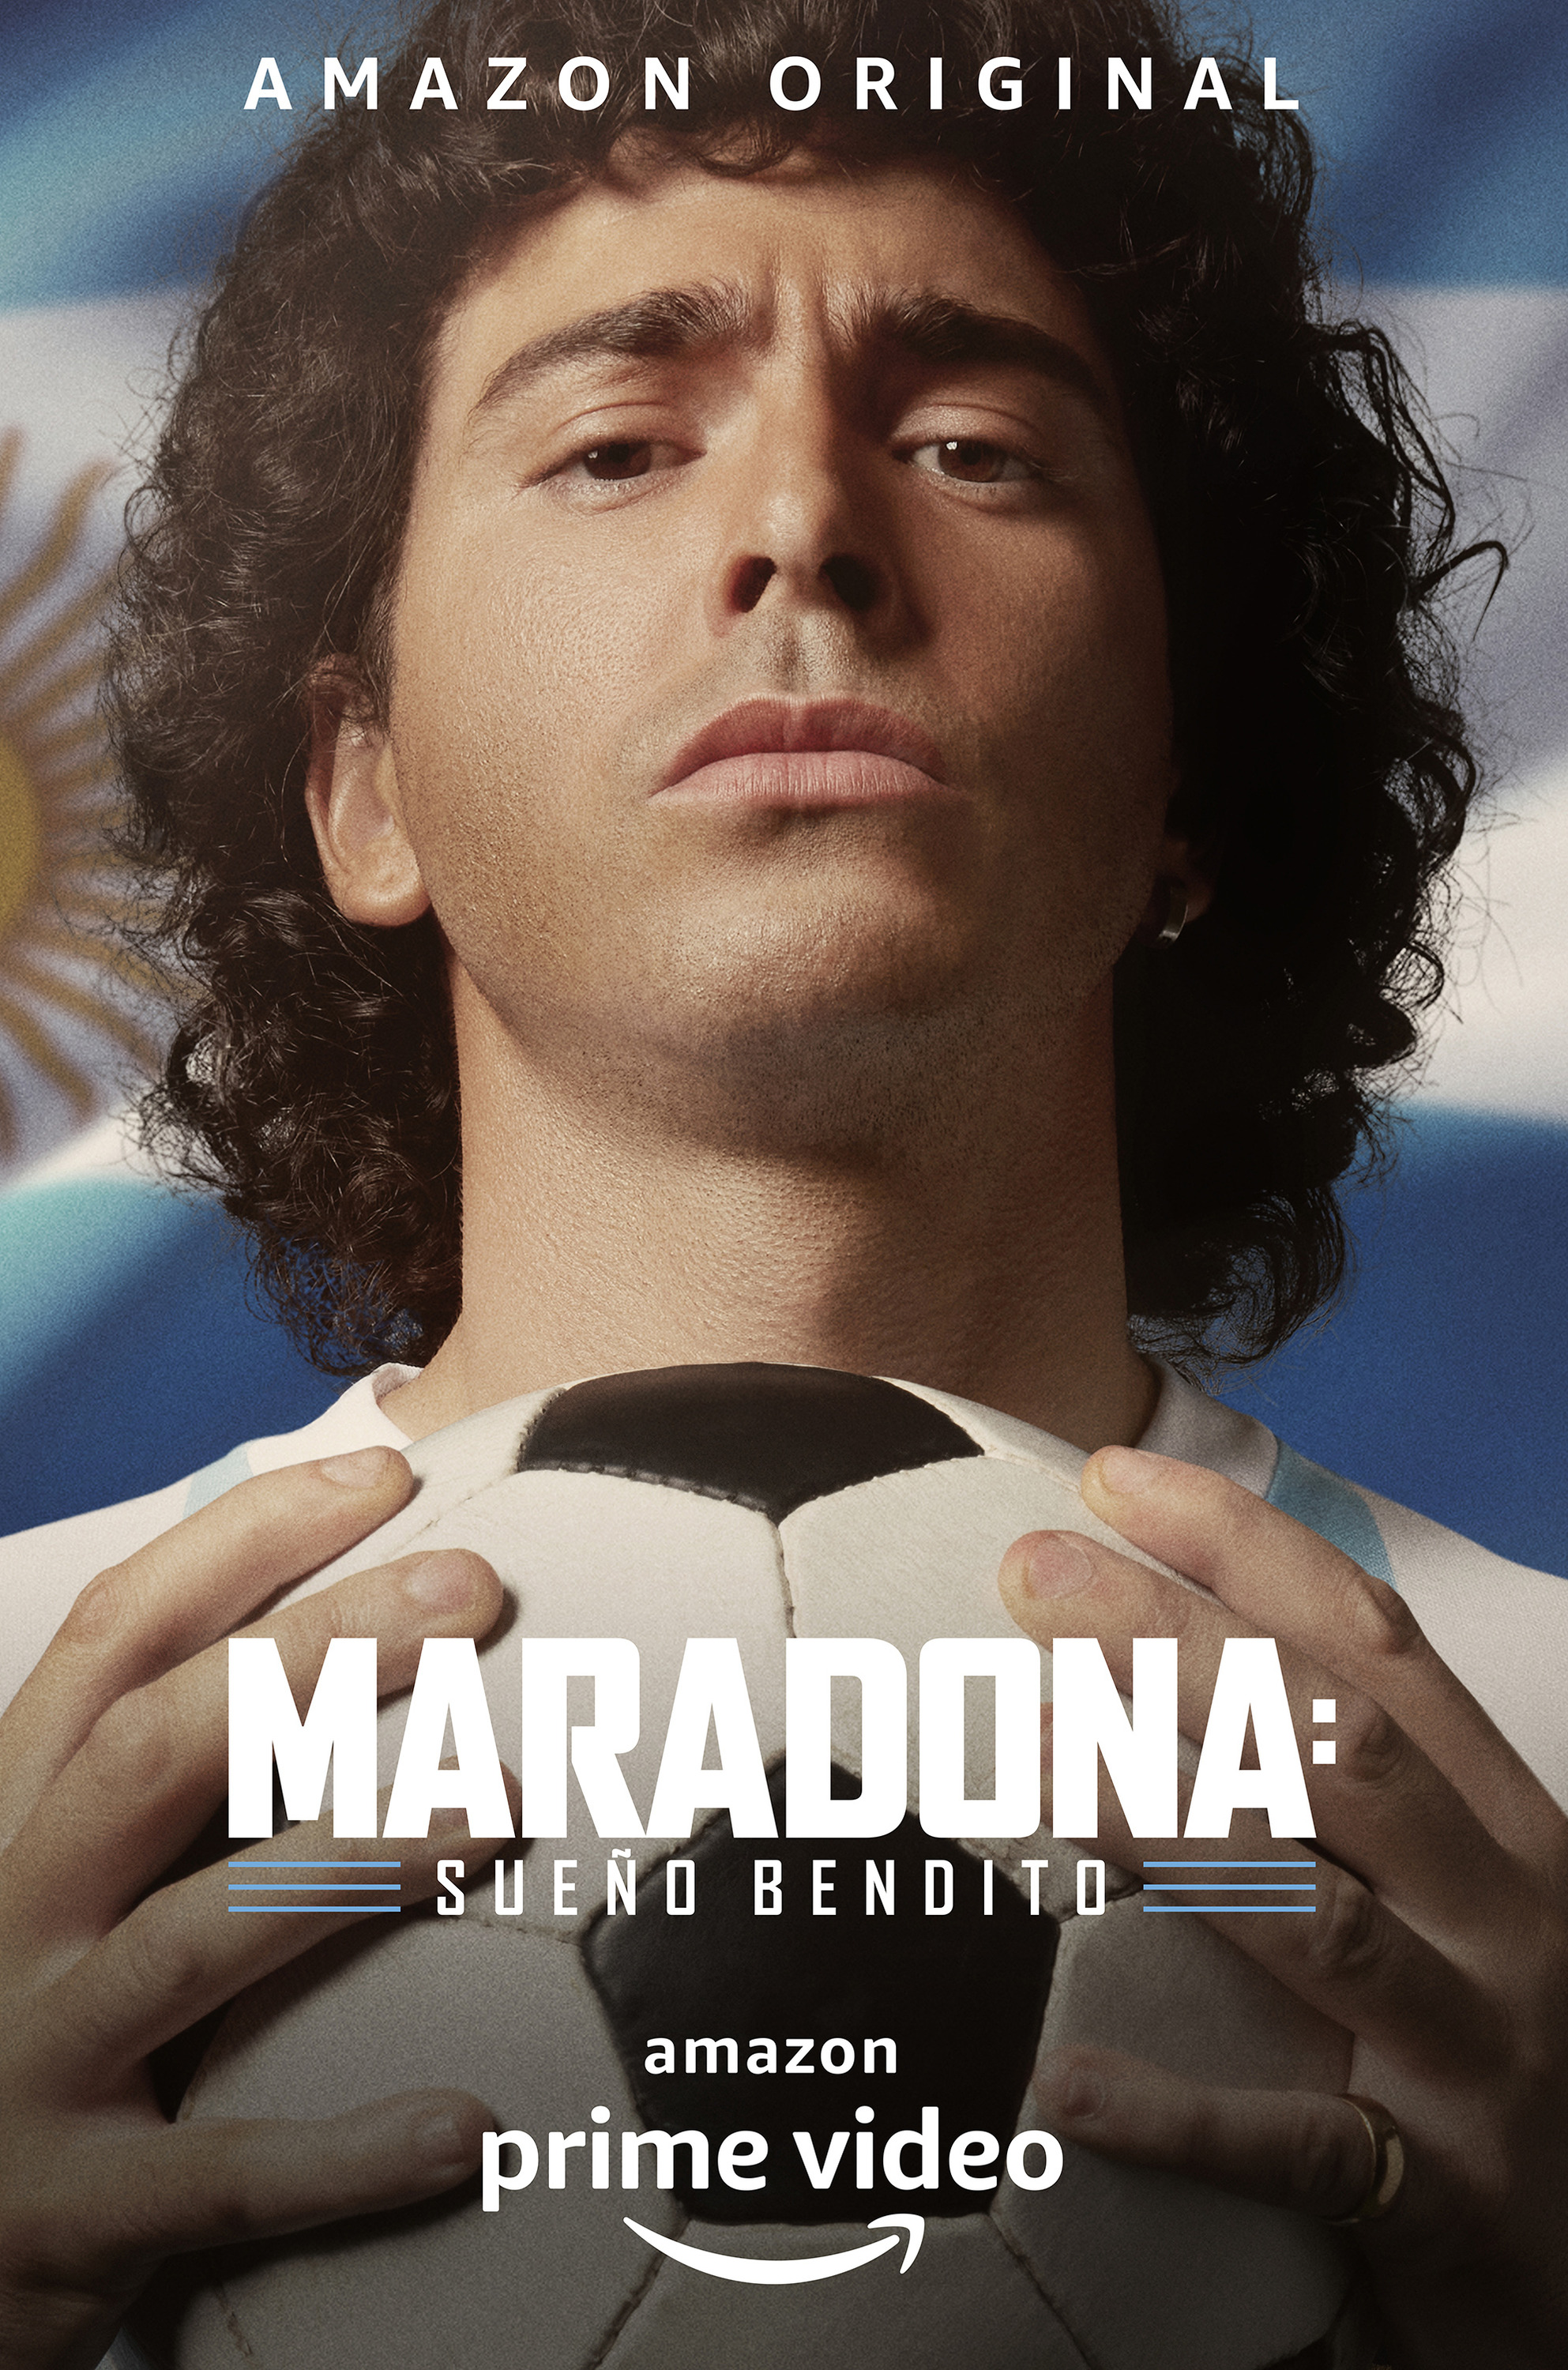 Mega Sized TV Poster Image for Maradona, sueño bendito (#4 of 21)